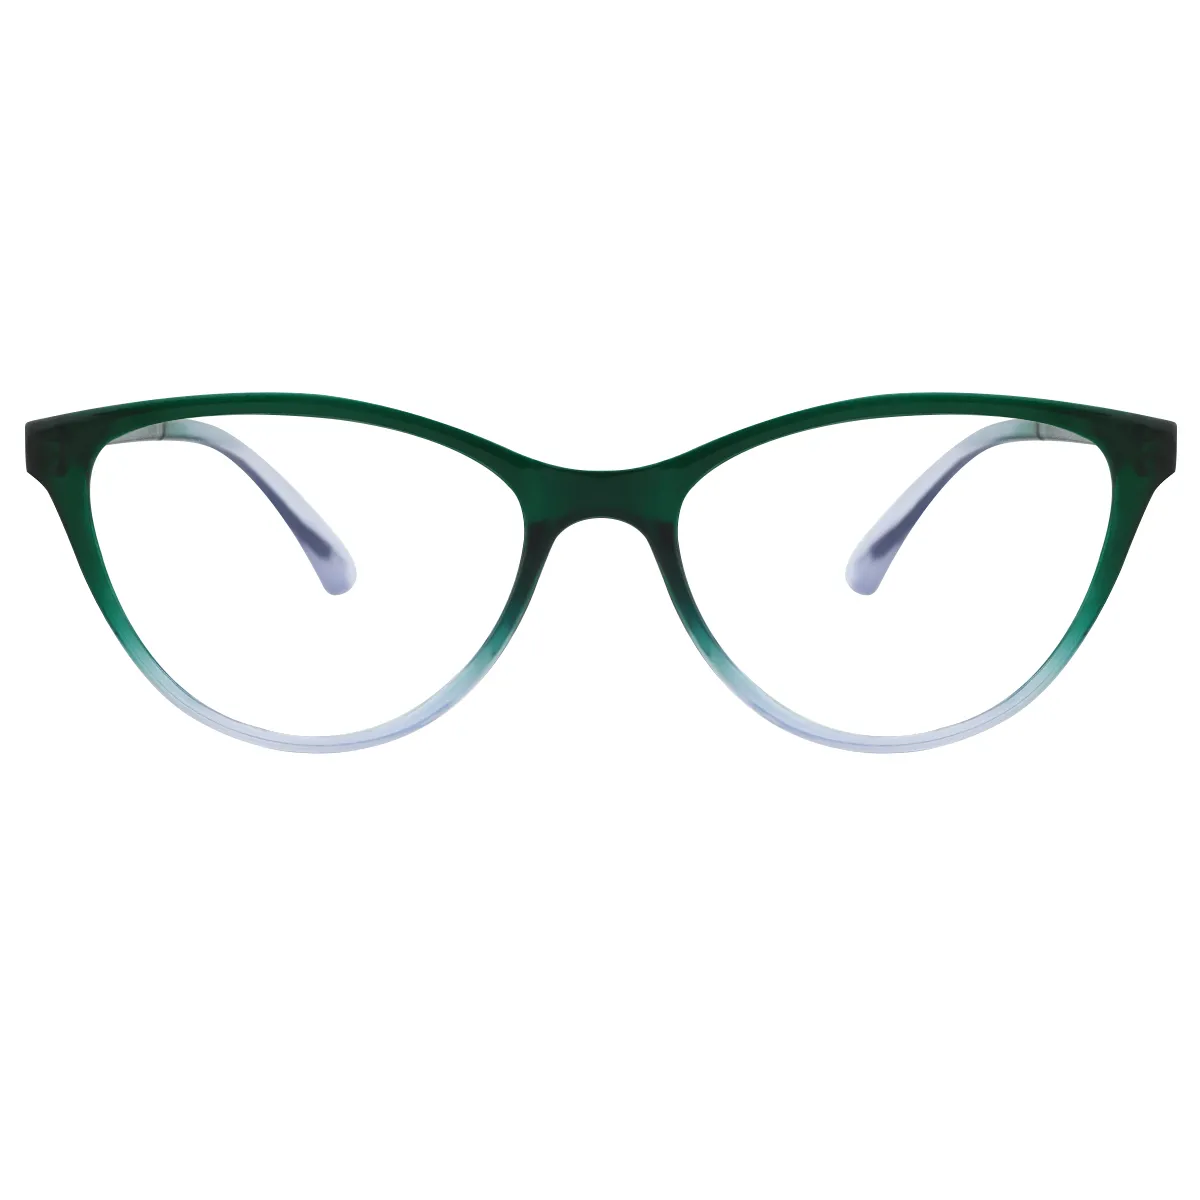 Hispania - Square Green Reading glasses for Women